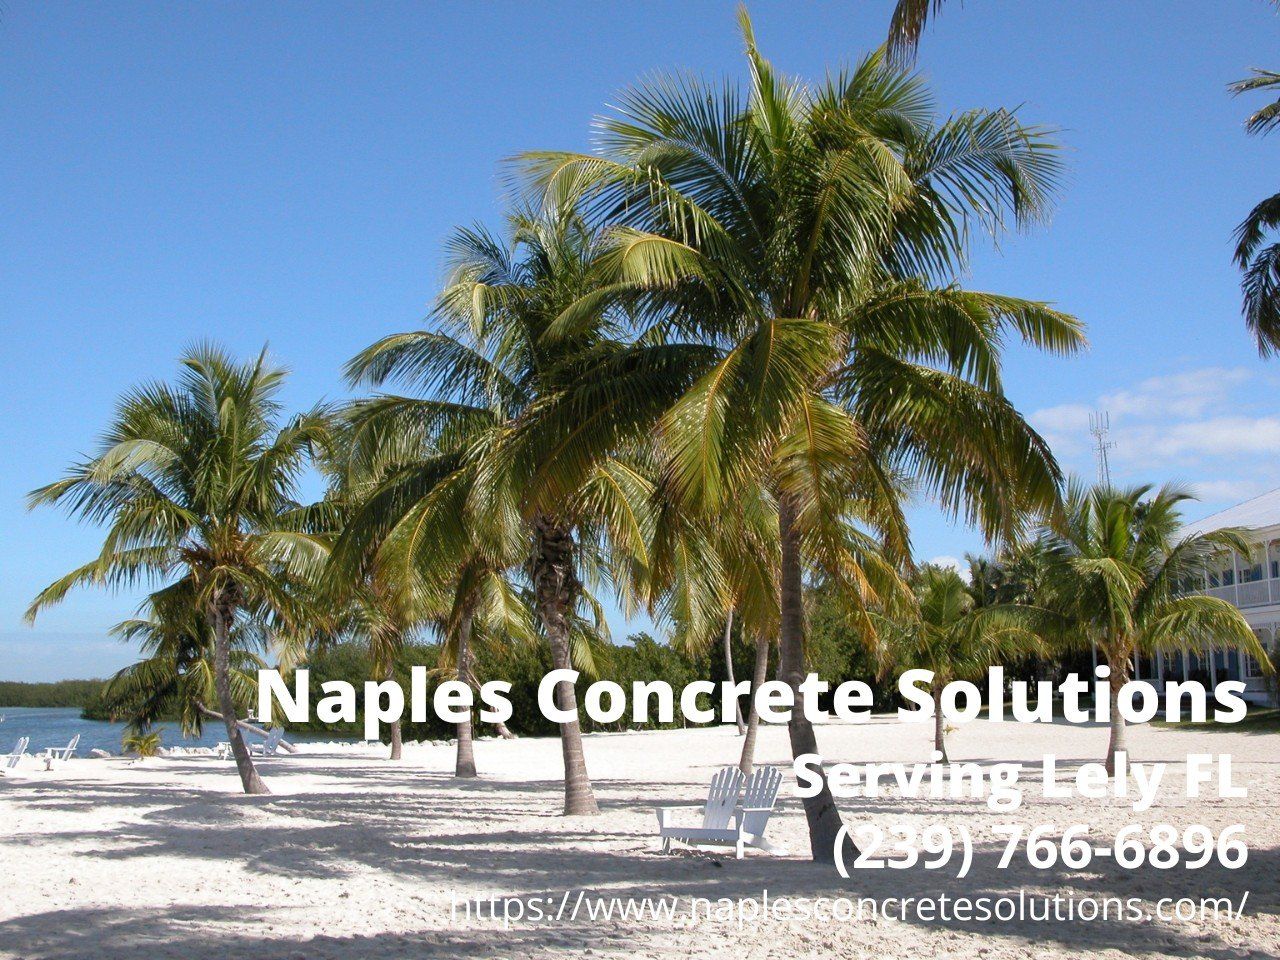 contact info of Naples Concrete Solutions - a decorative concrete company serving Lely FL